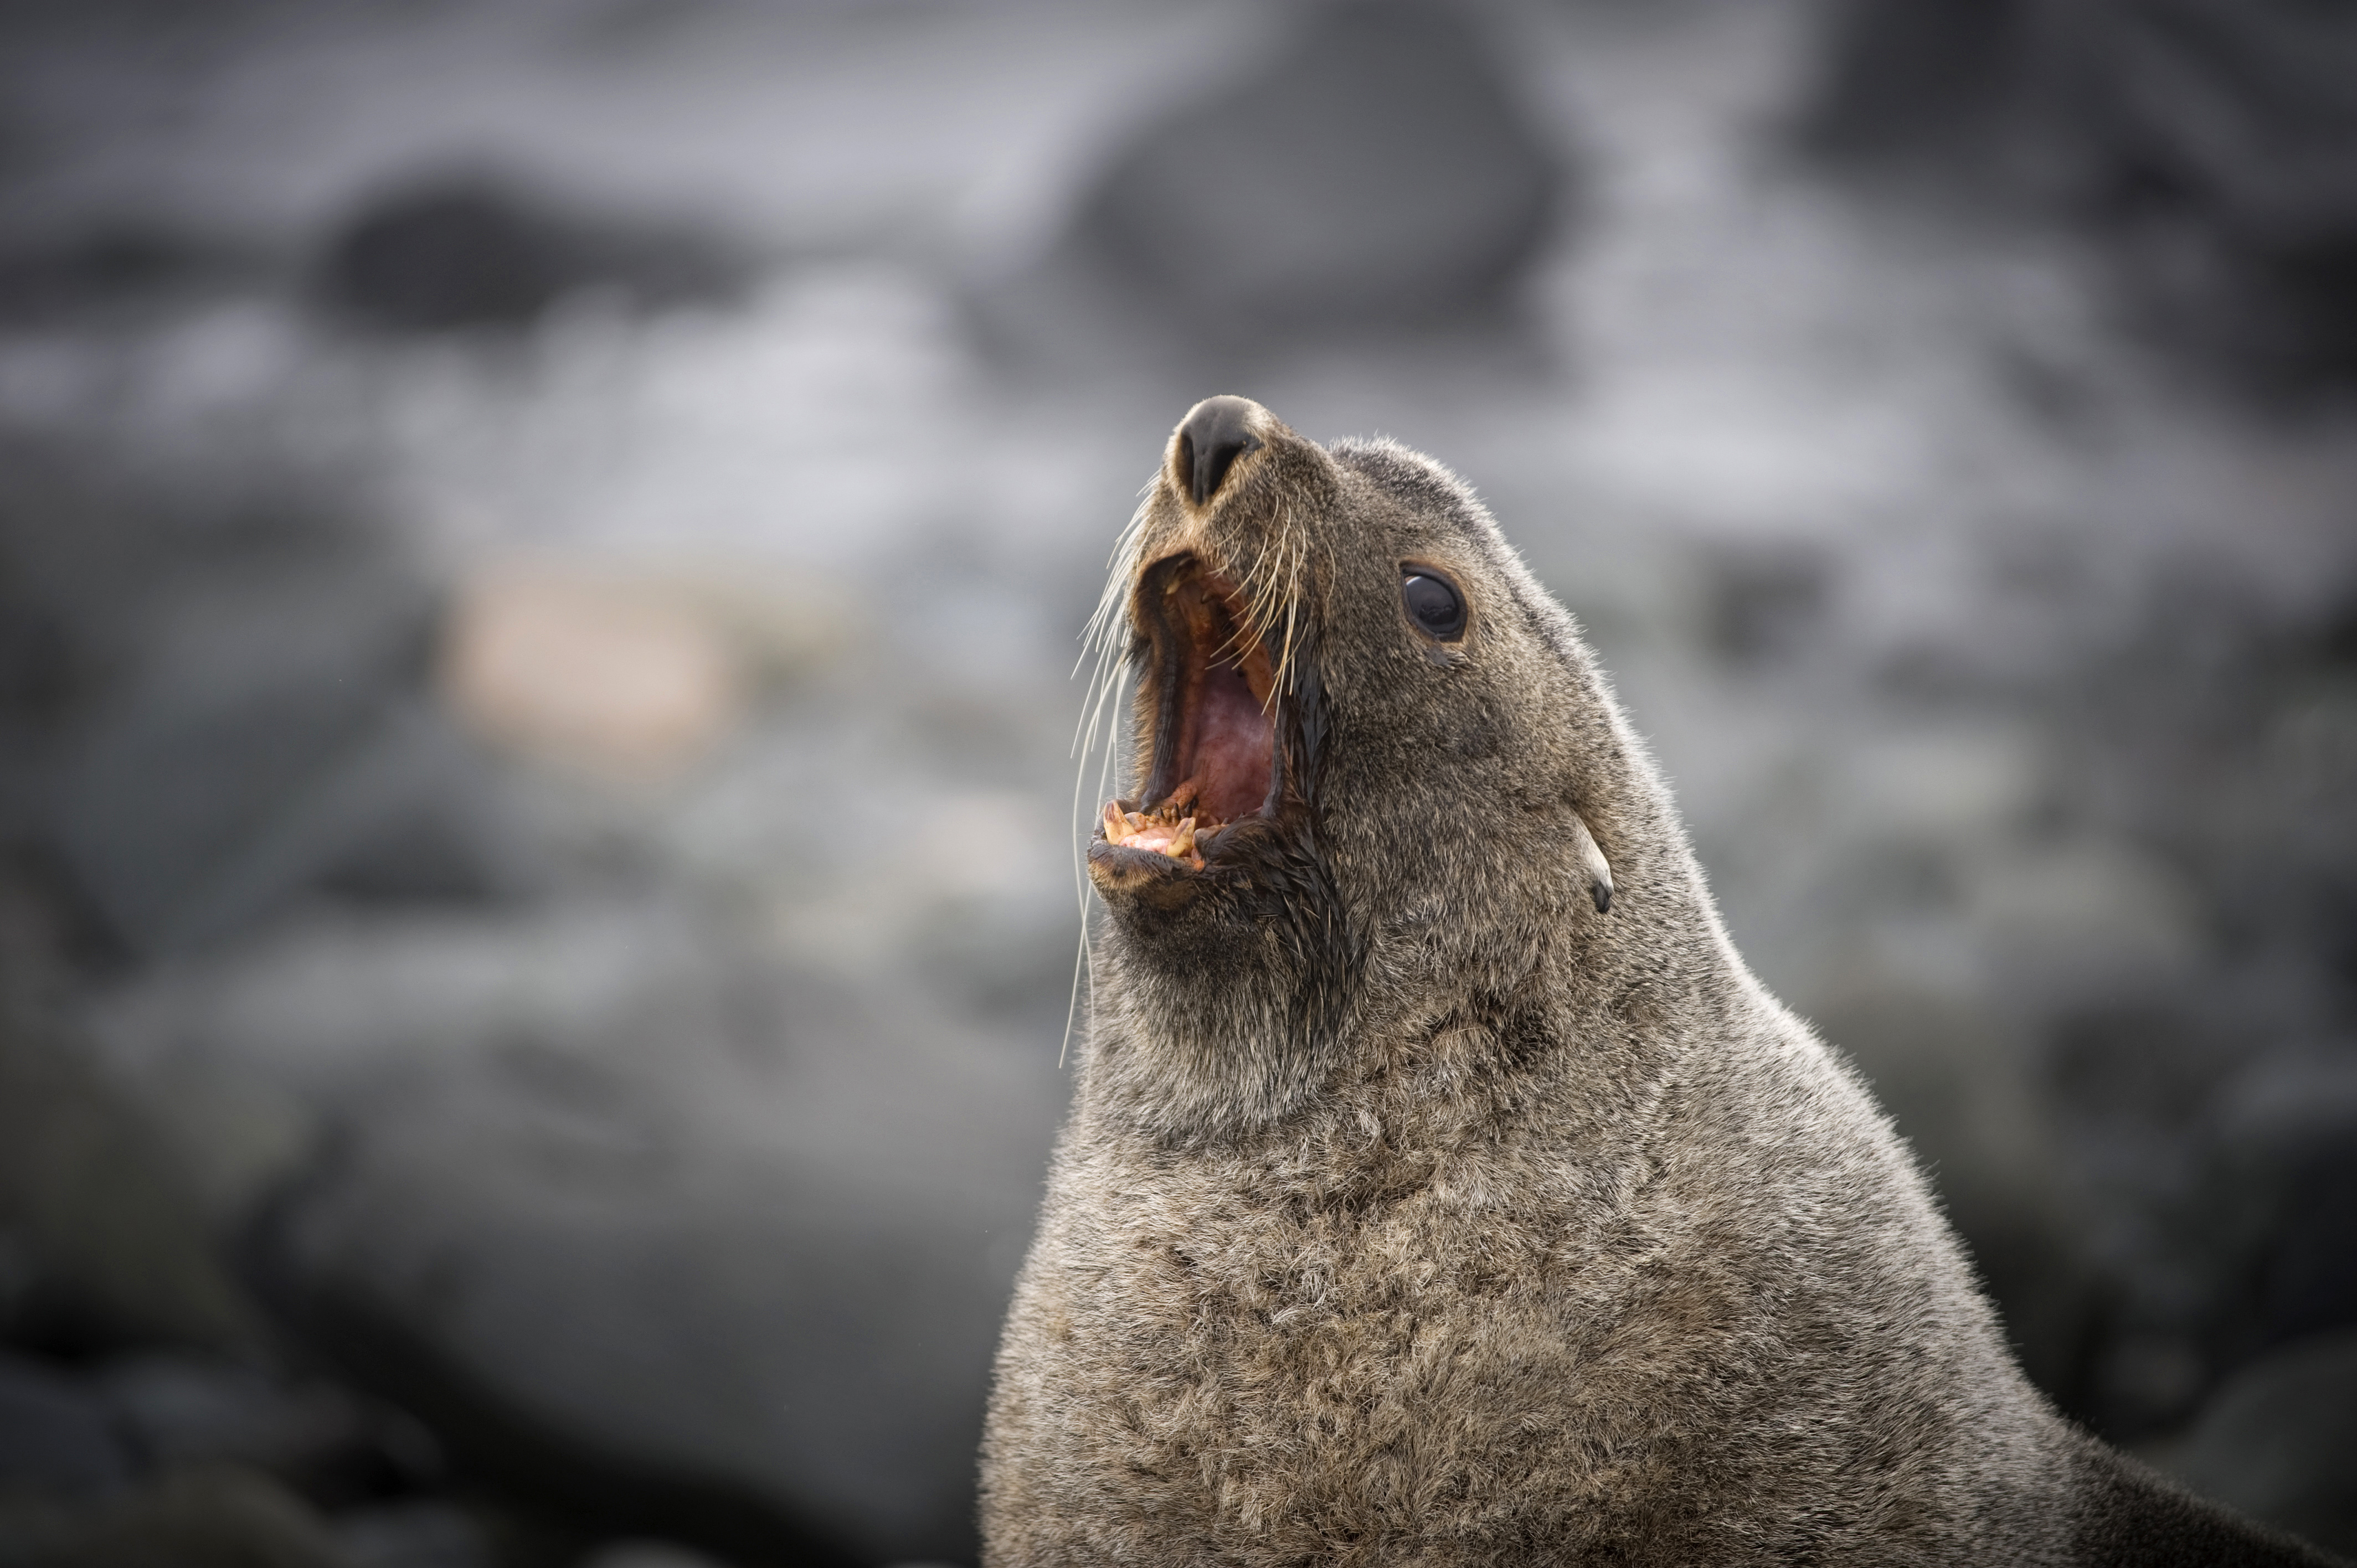 Strange but true: Seals found sexually assaulting penguins - CBS News